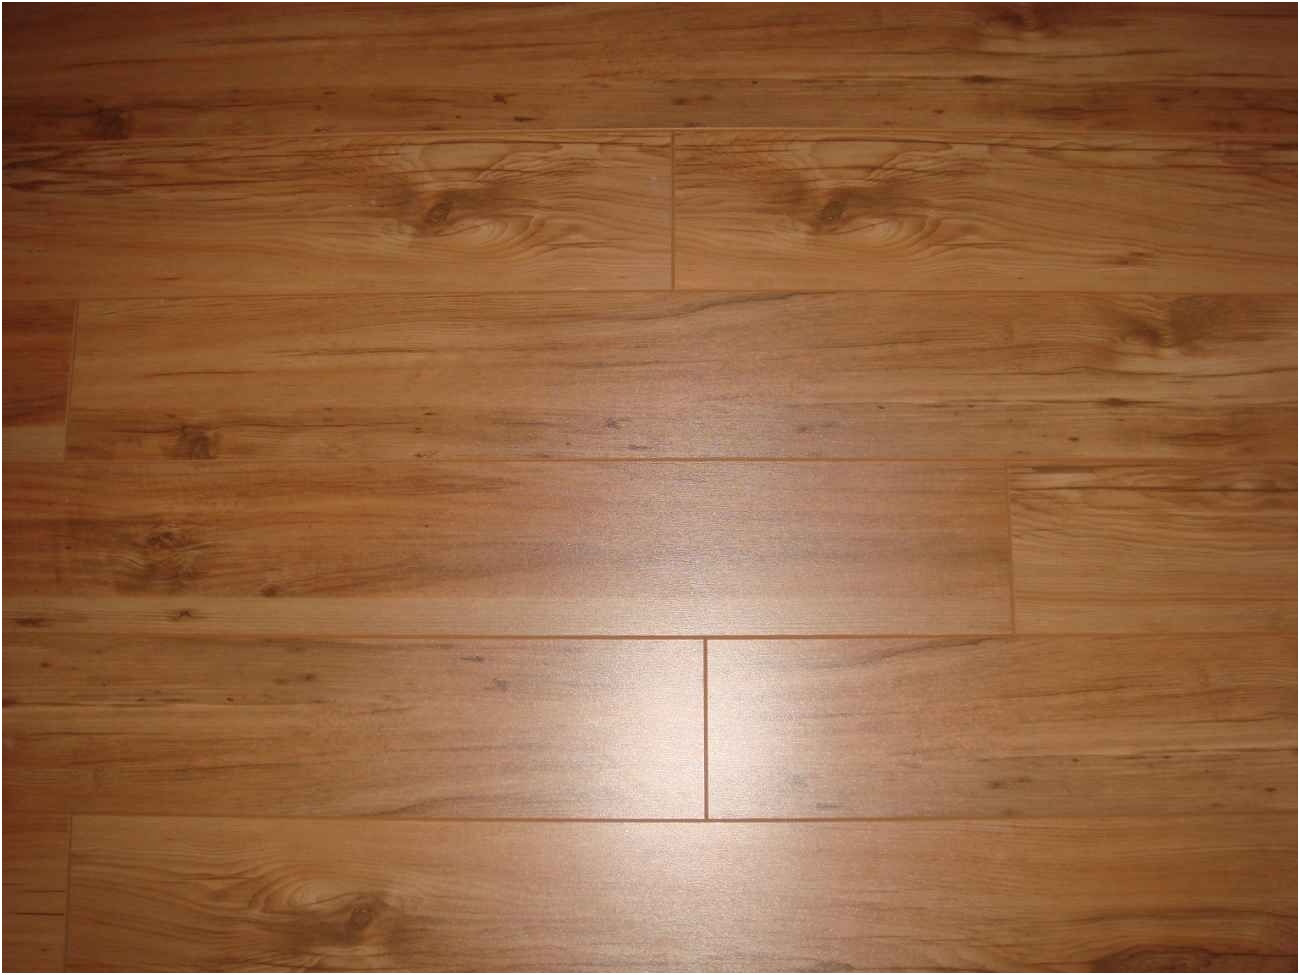 teak hardwood flooring cost of hardwood flooring over ceramic tile stock 3 4 x 4 3 4 solid golden pertaining to hardwood flooring over ceramic tile galerie tile that looks like hardwood floors elegant i pinimg 736x